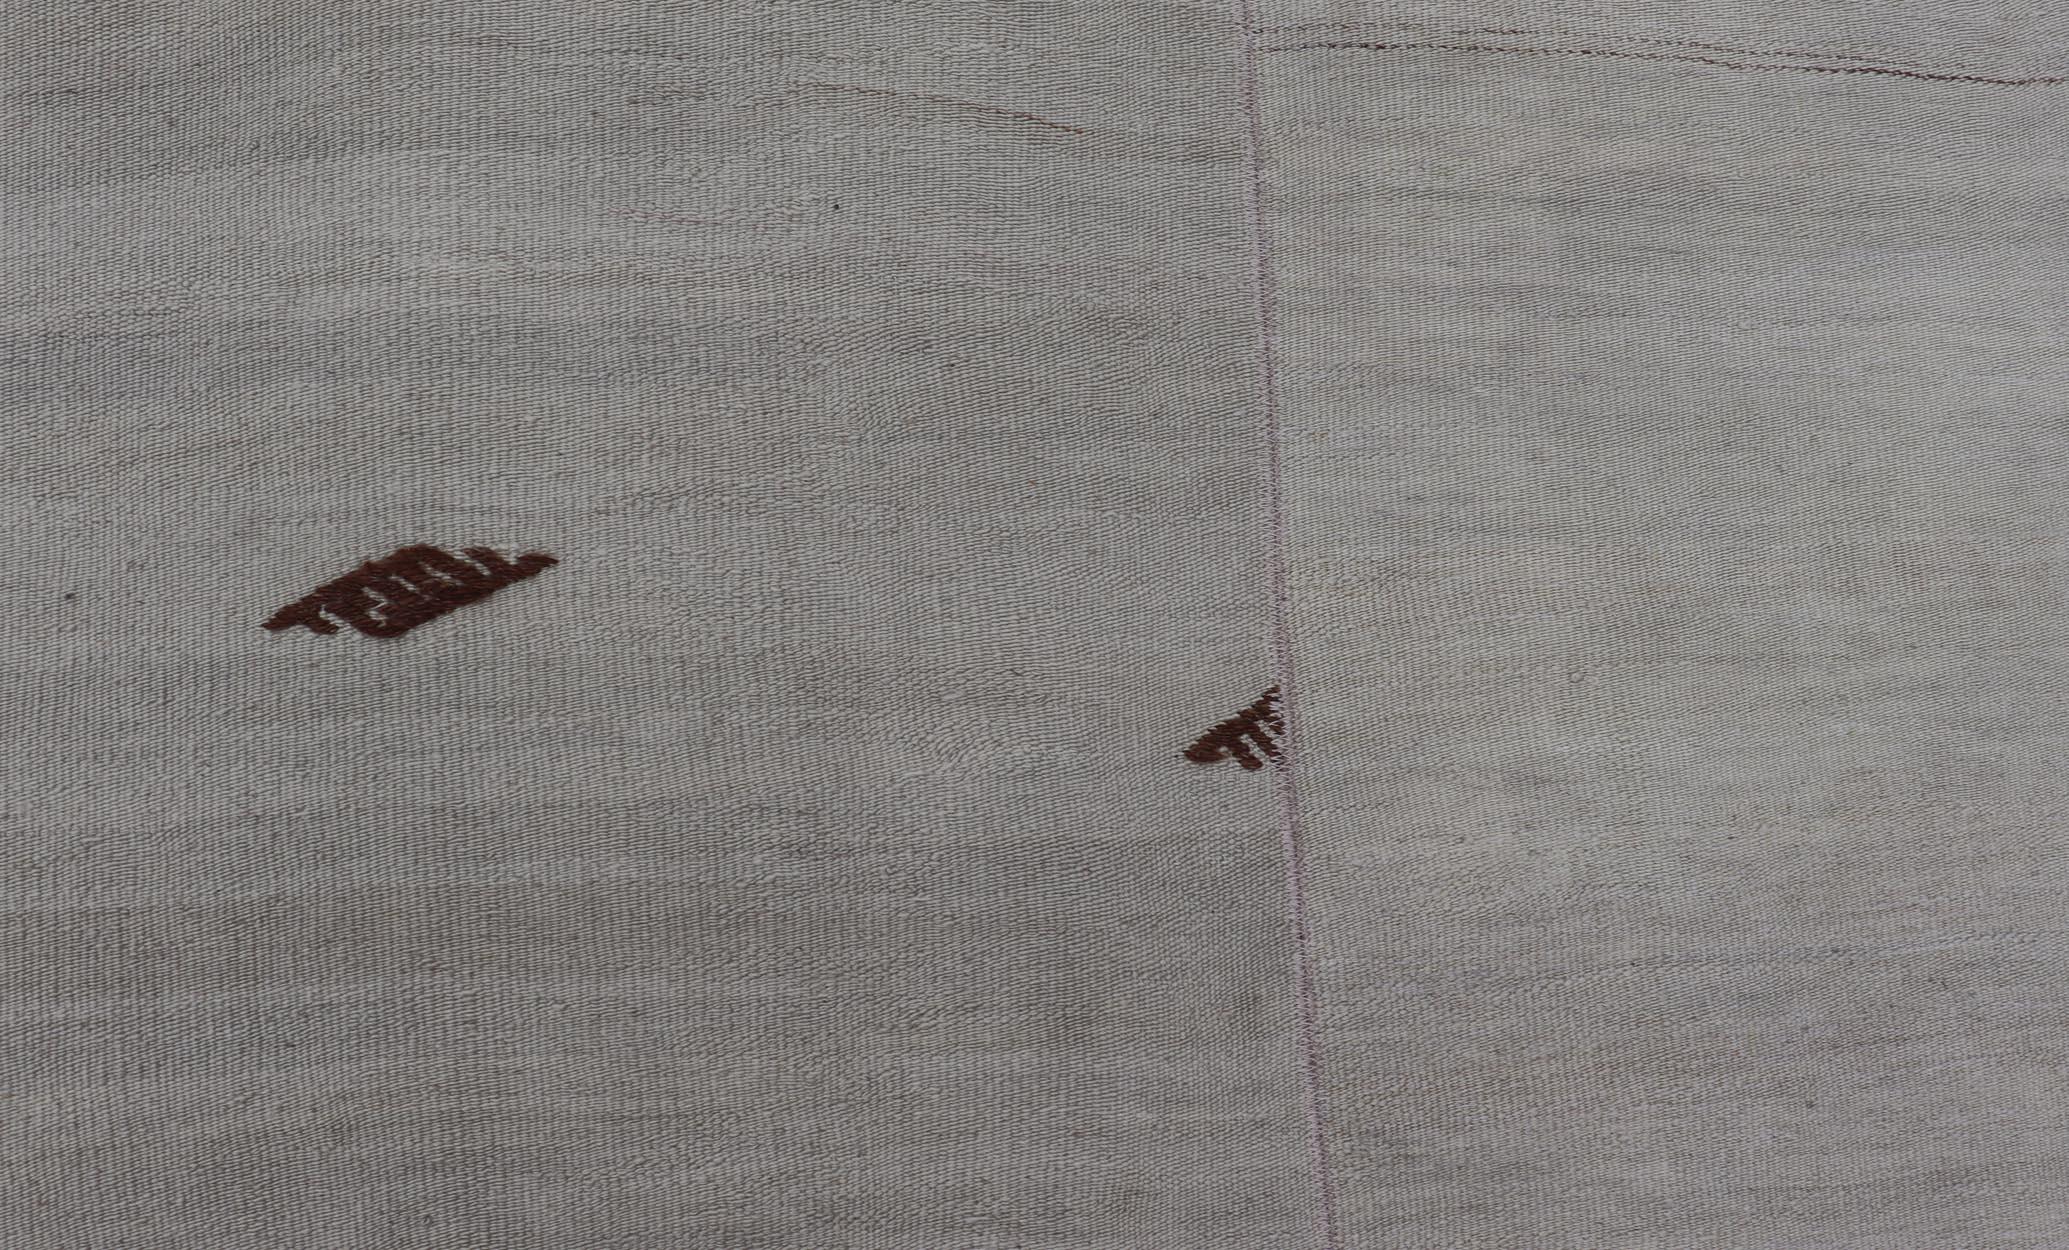 Turkish Vintage Kilim in Wool with Sub-Geometric Striped Panel Design. Vintage Kilim Rug with All-Over Sub-Geometric Panel Design. Keivan Woven Arts; rug EN-13914, country of origin / type: Turkey / Kilim, circa 1950.
Measures: 10'8 x 11'5 
This